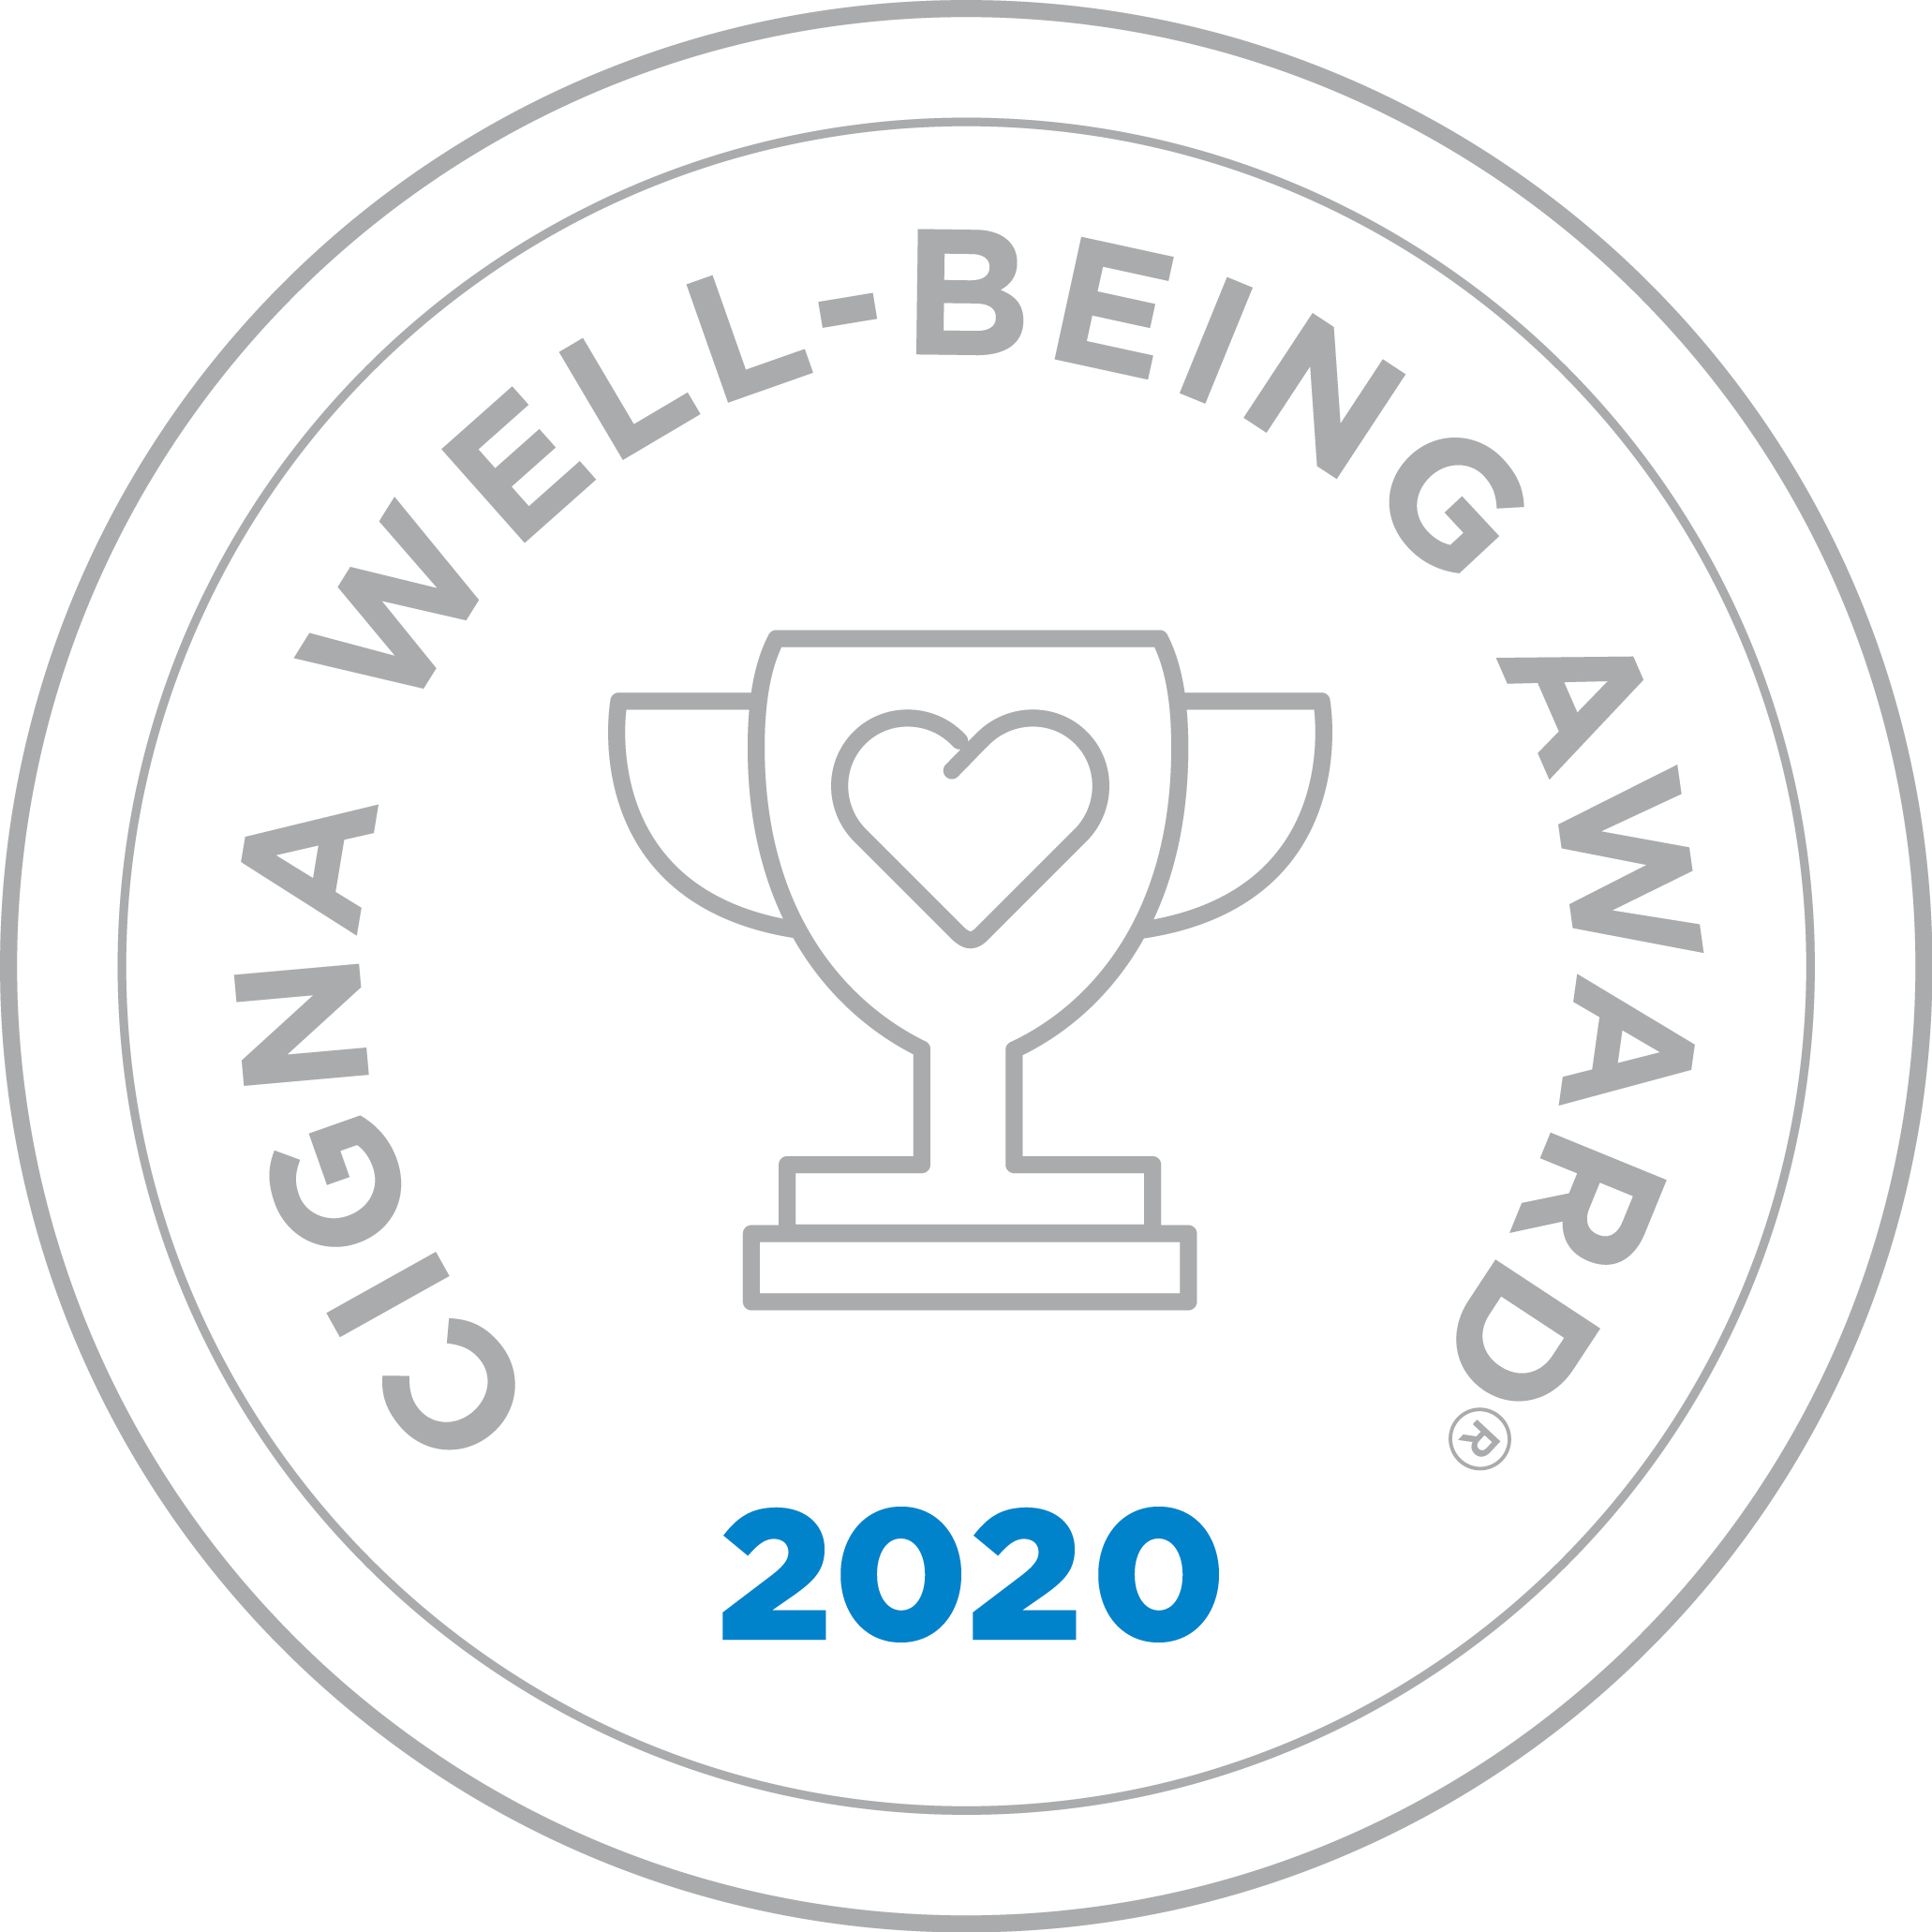 DRMP Receives Cigna Well-Being Award 